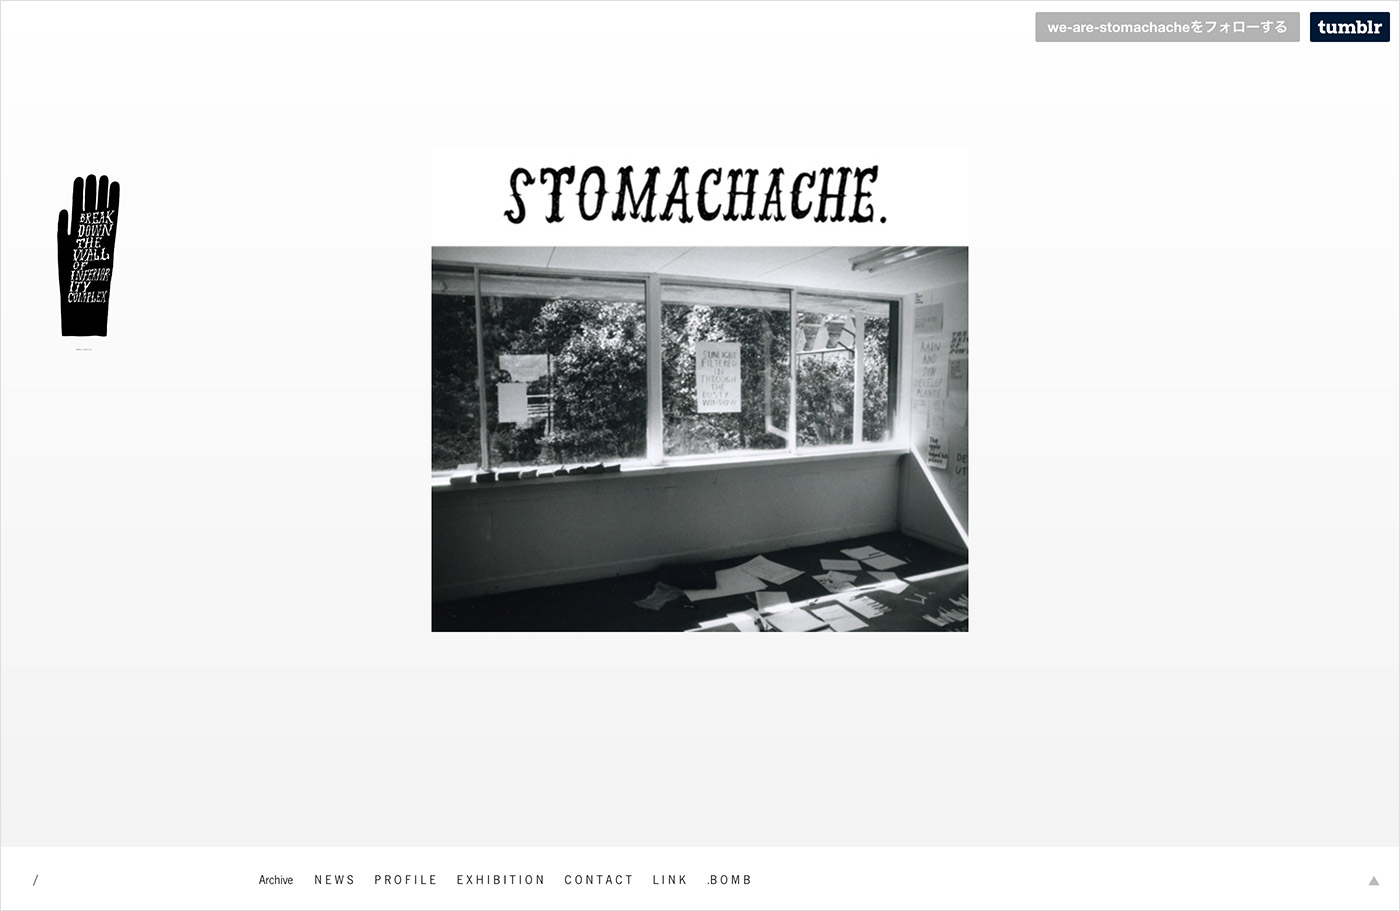 WE ARE STOMACHACHE.ウェブサイトの画面キャプチャ画像